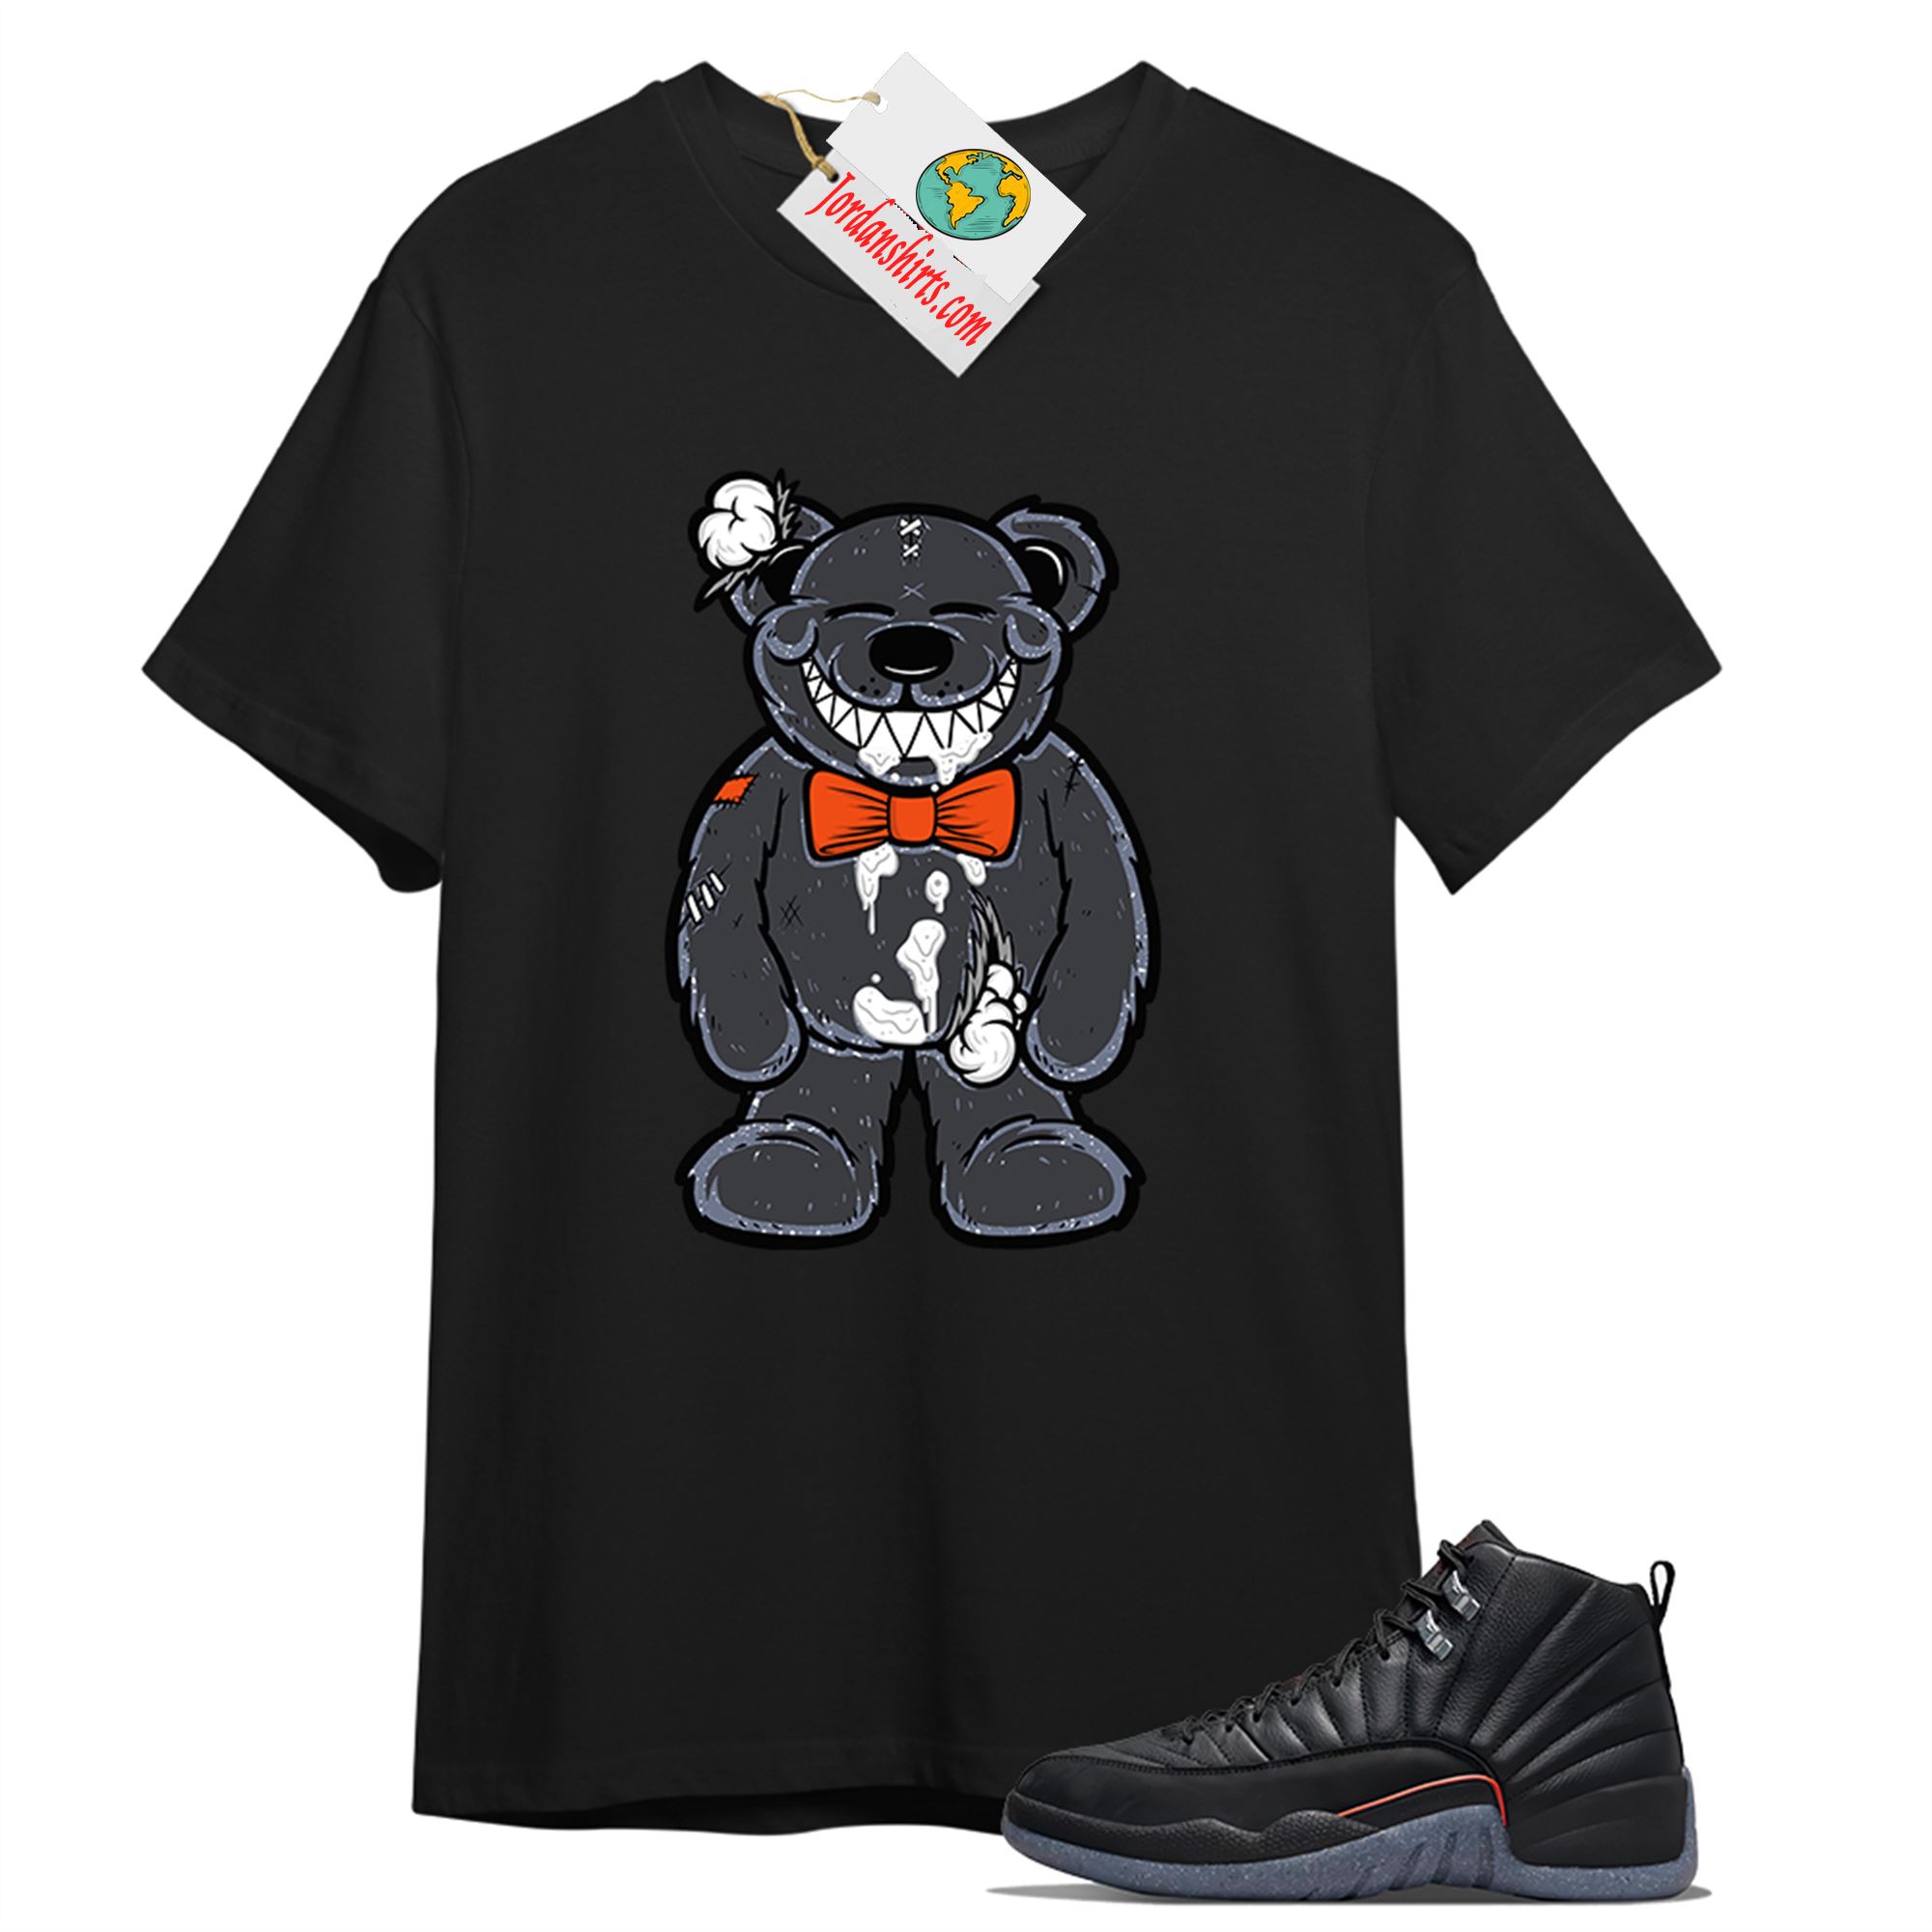 Jordan 12 Shirt, Teddy Bear Smile Black T-shirt Air Jordan 12 Utility Grind 12s Full Size Up To 5xl